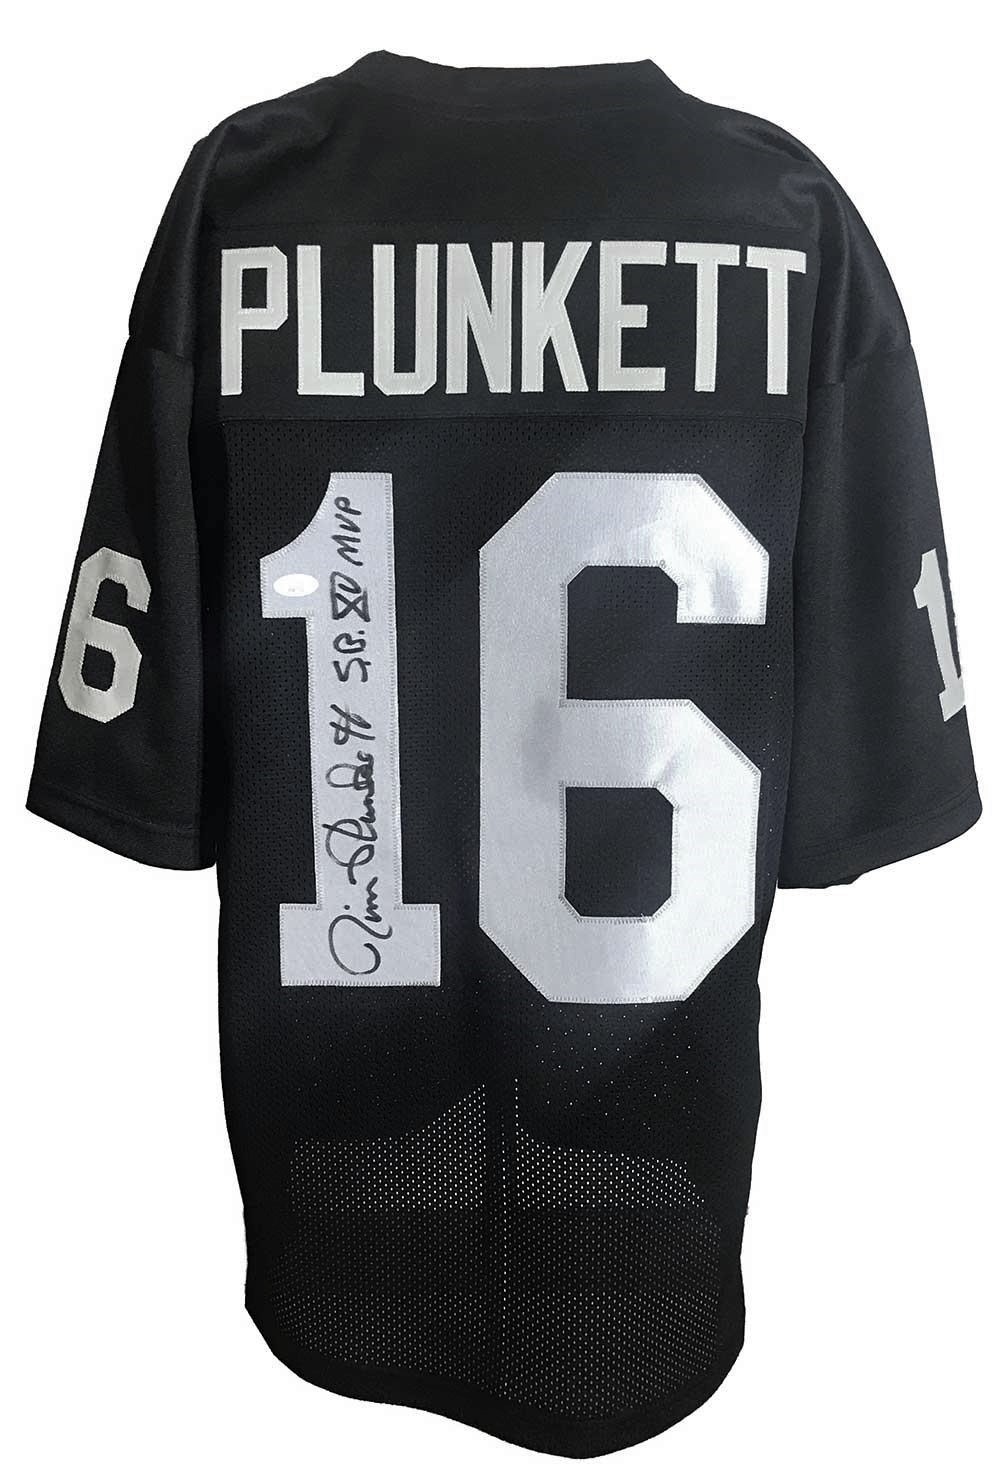 Jim Plunkett Autographed Pro Style Jersey 